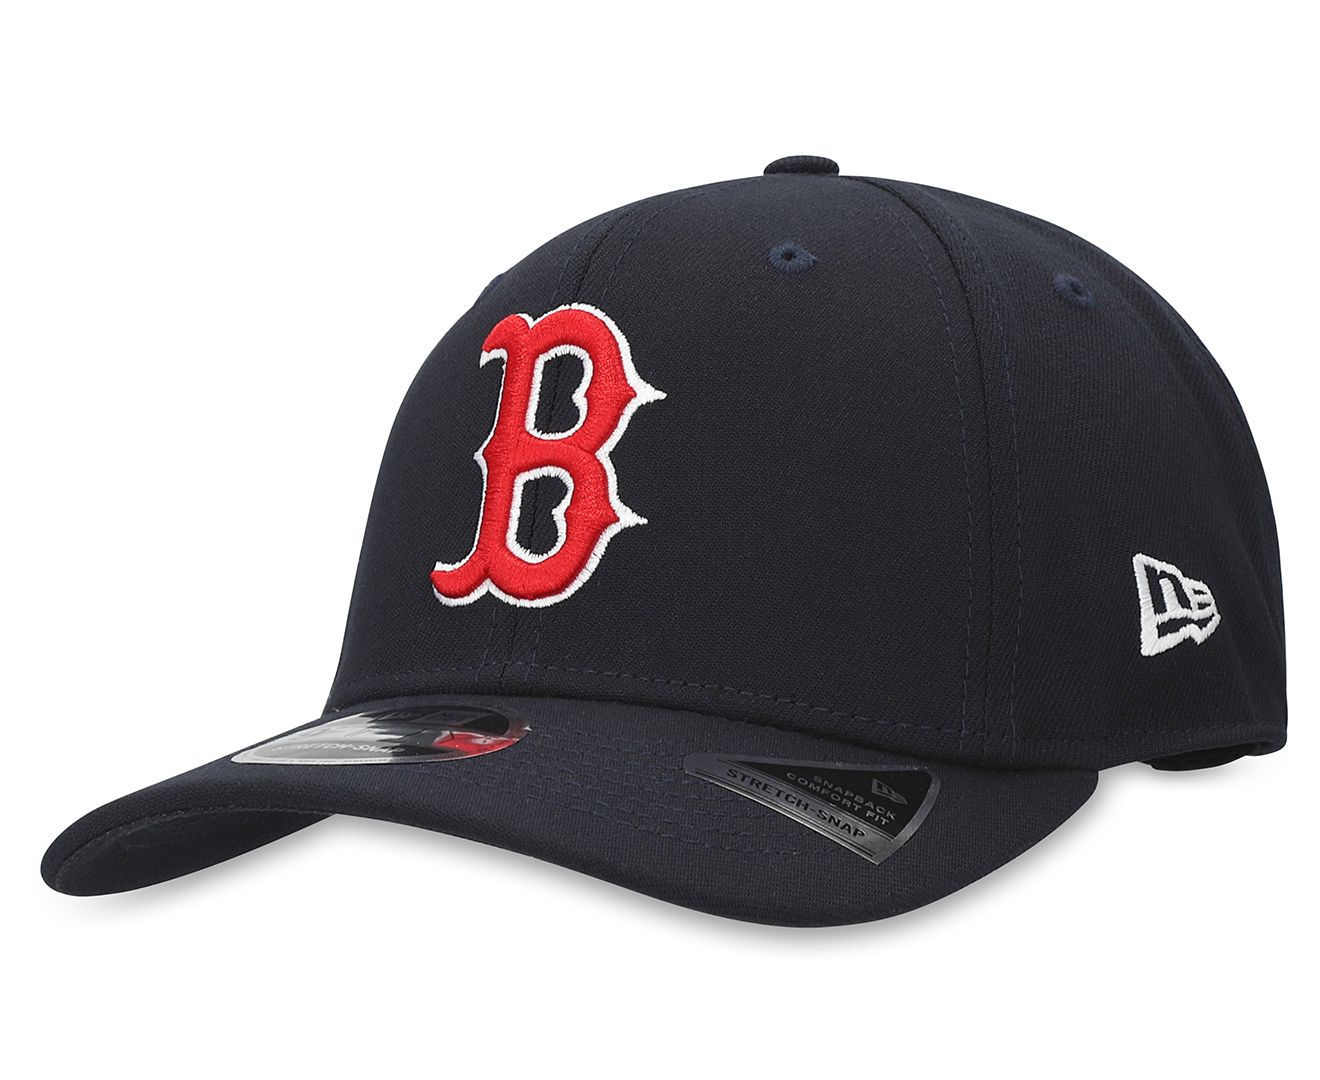 New Era 9FORTY Boston Red Sox Cap - Black | Catch.com.au